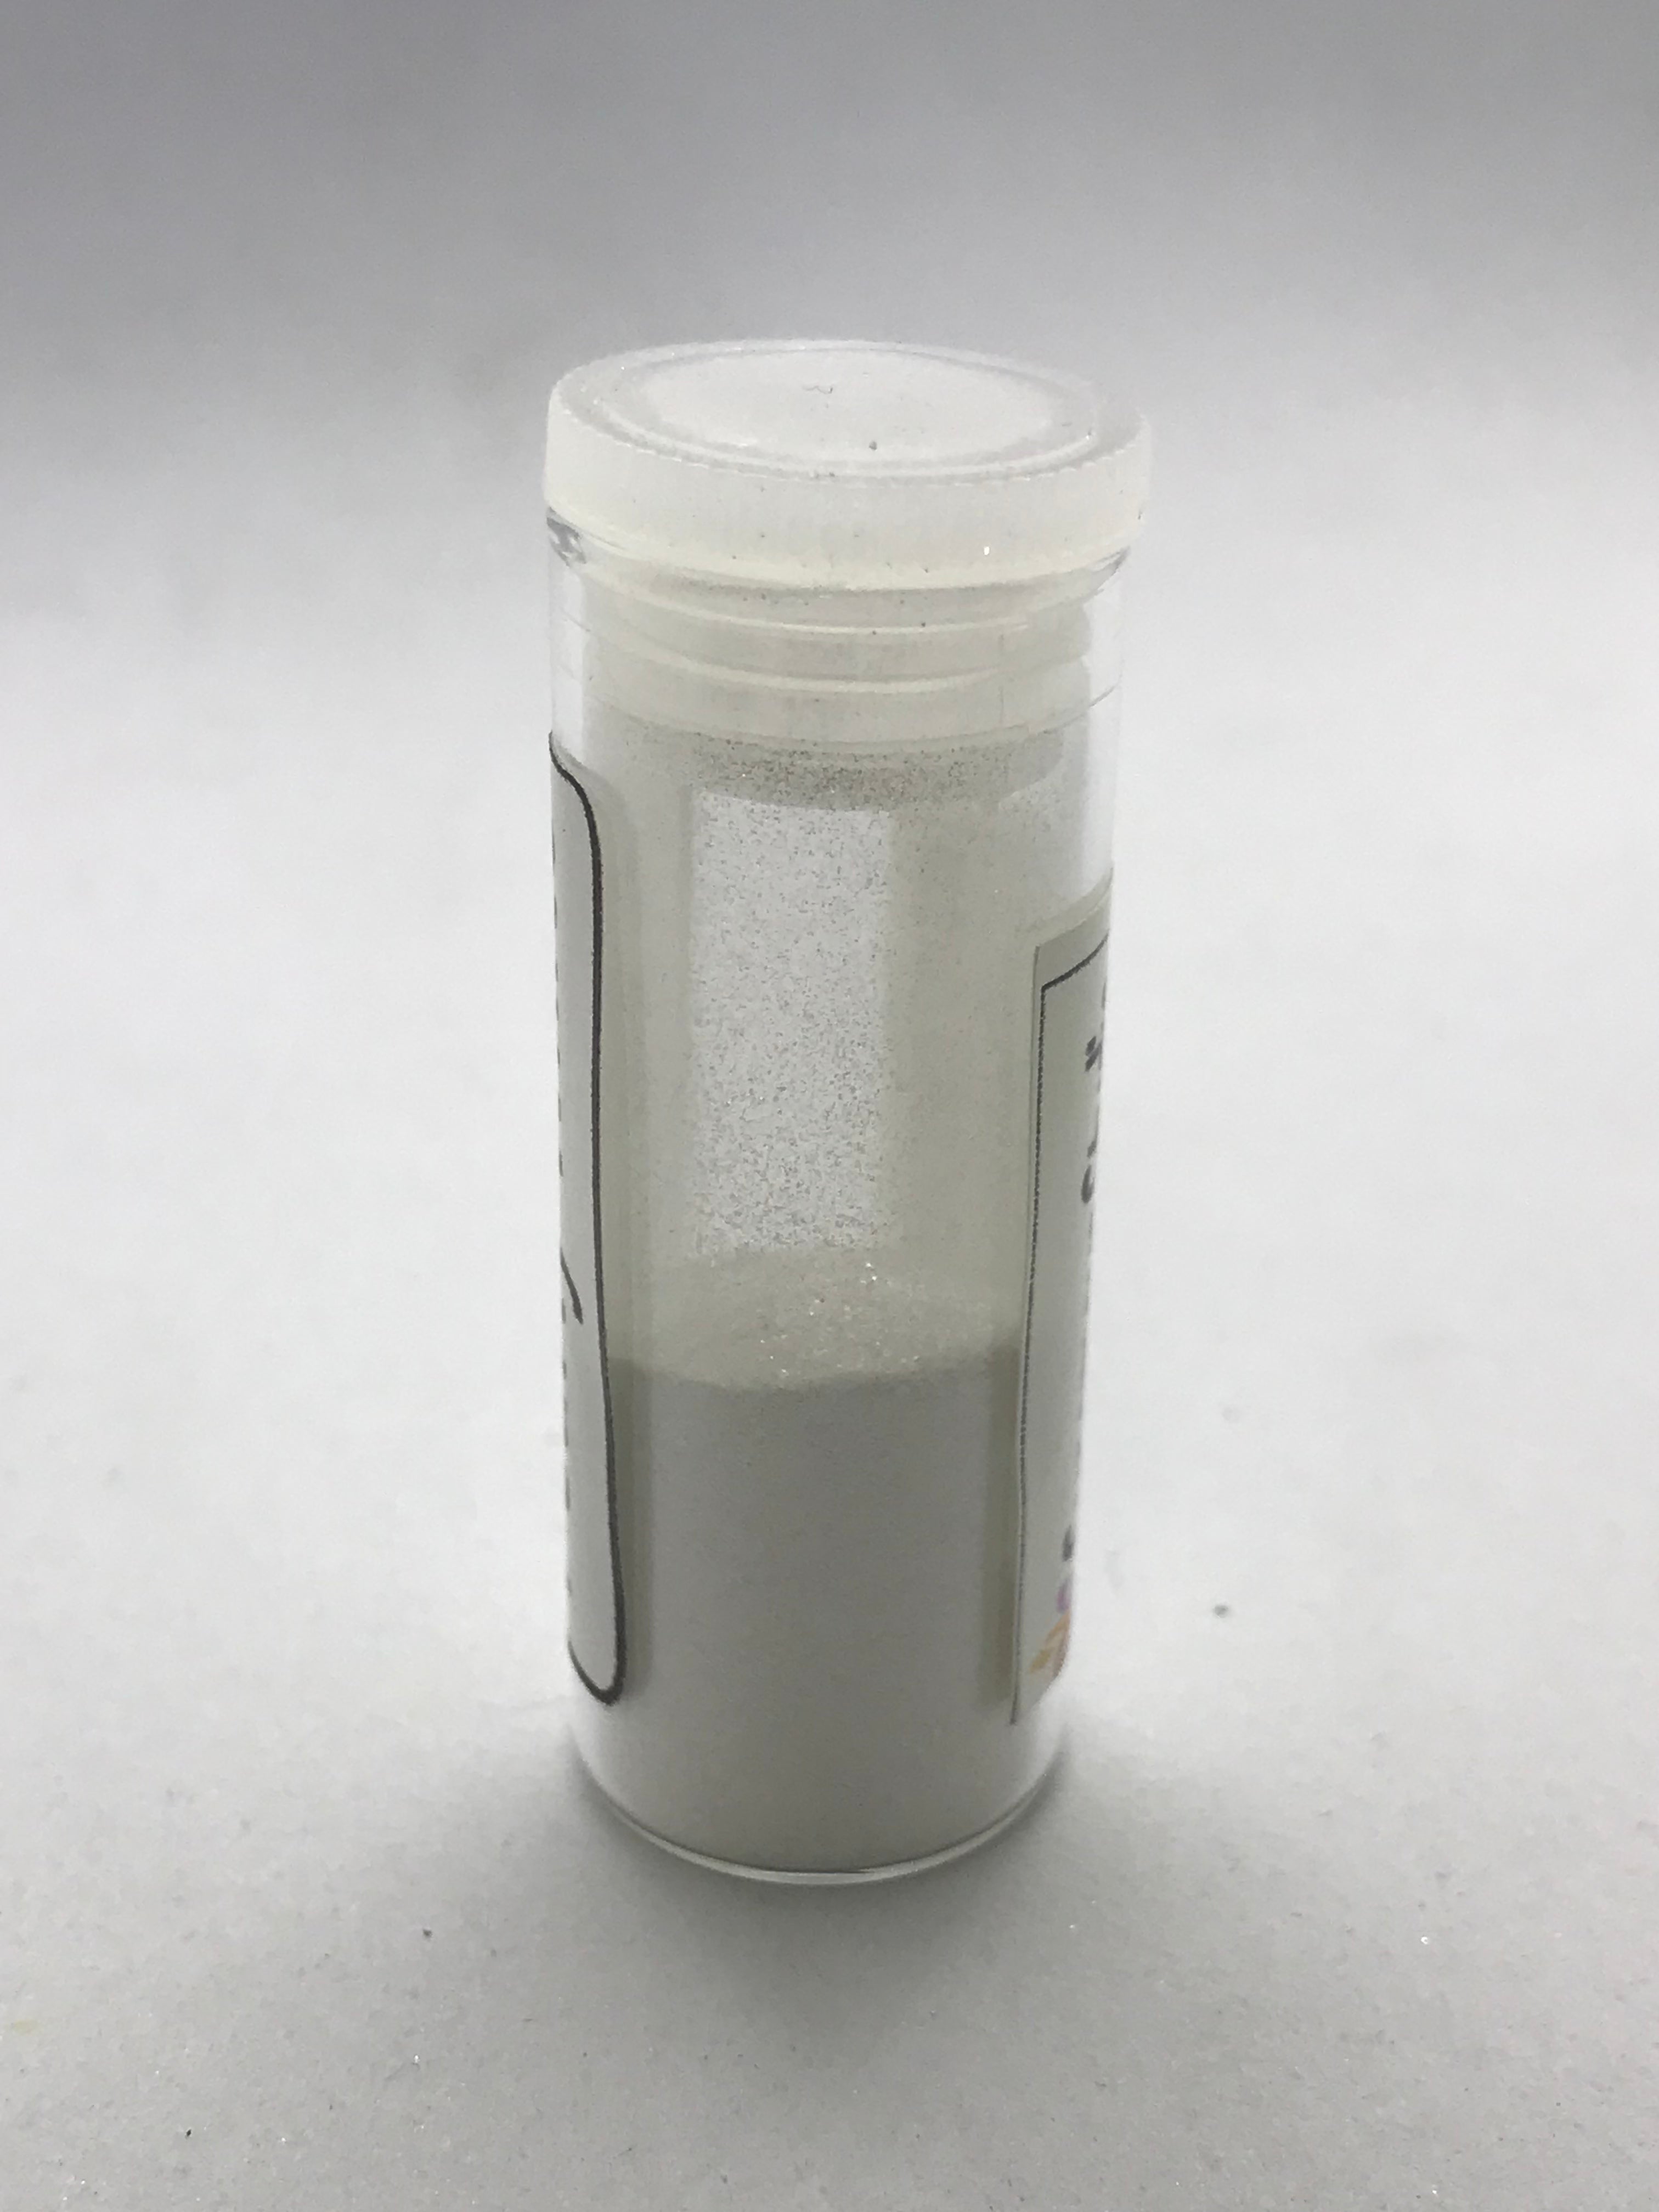 Pearly White Powder (2 grams)